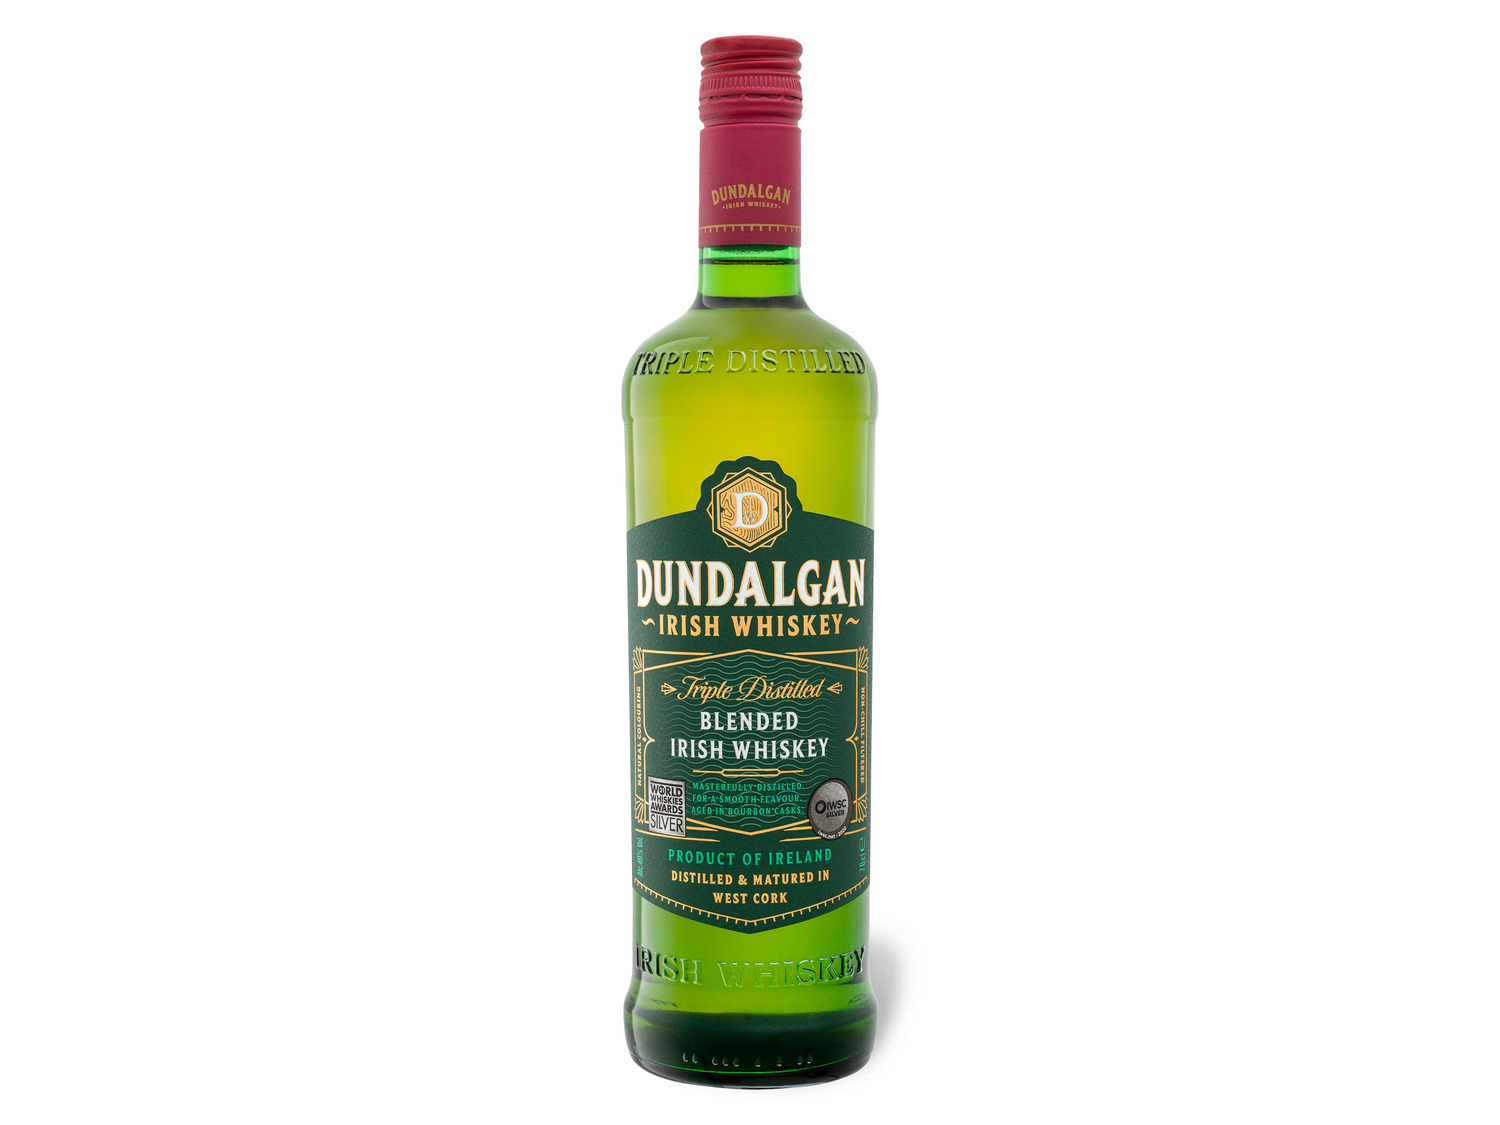 Dundalgan Blended | 40% Vol LIDL Irish Whiskey